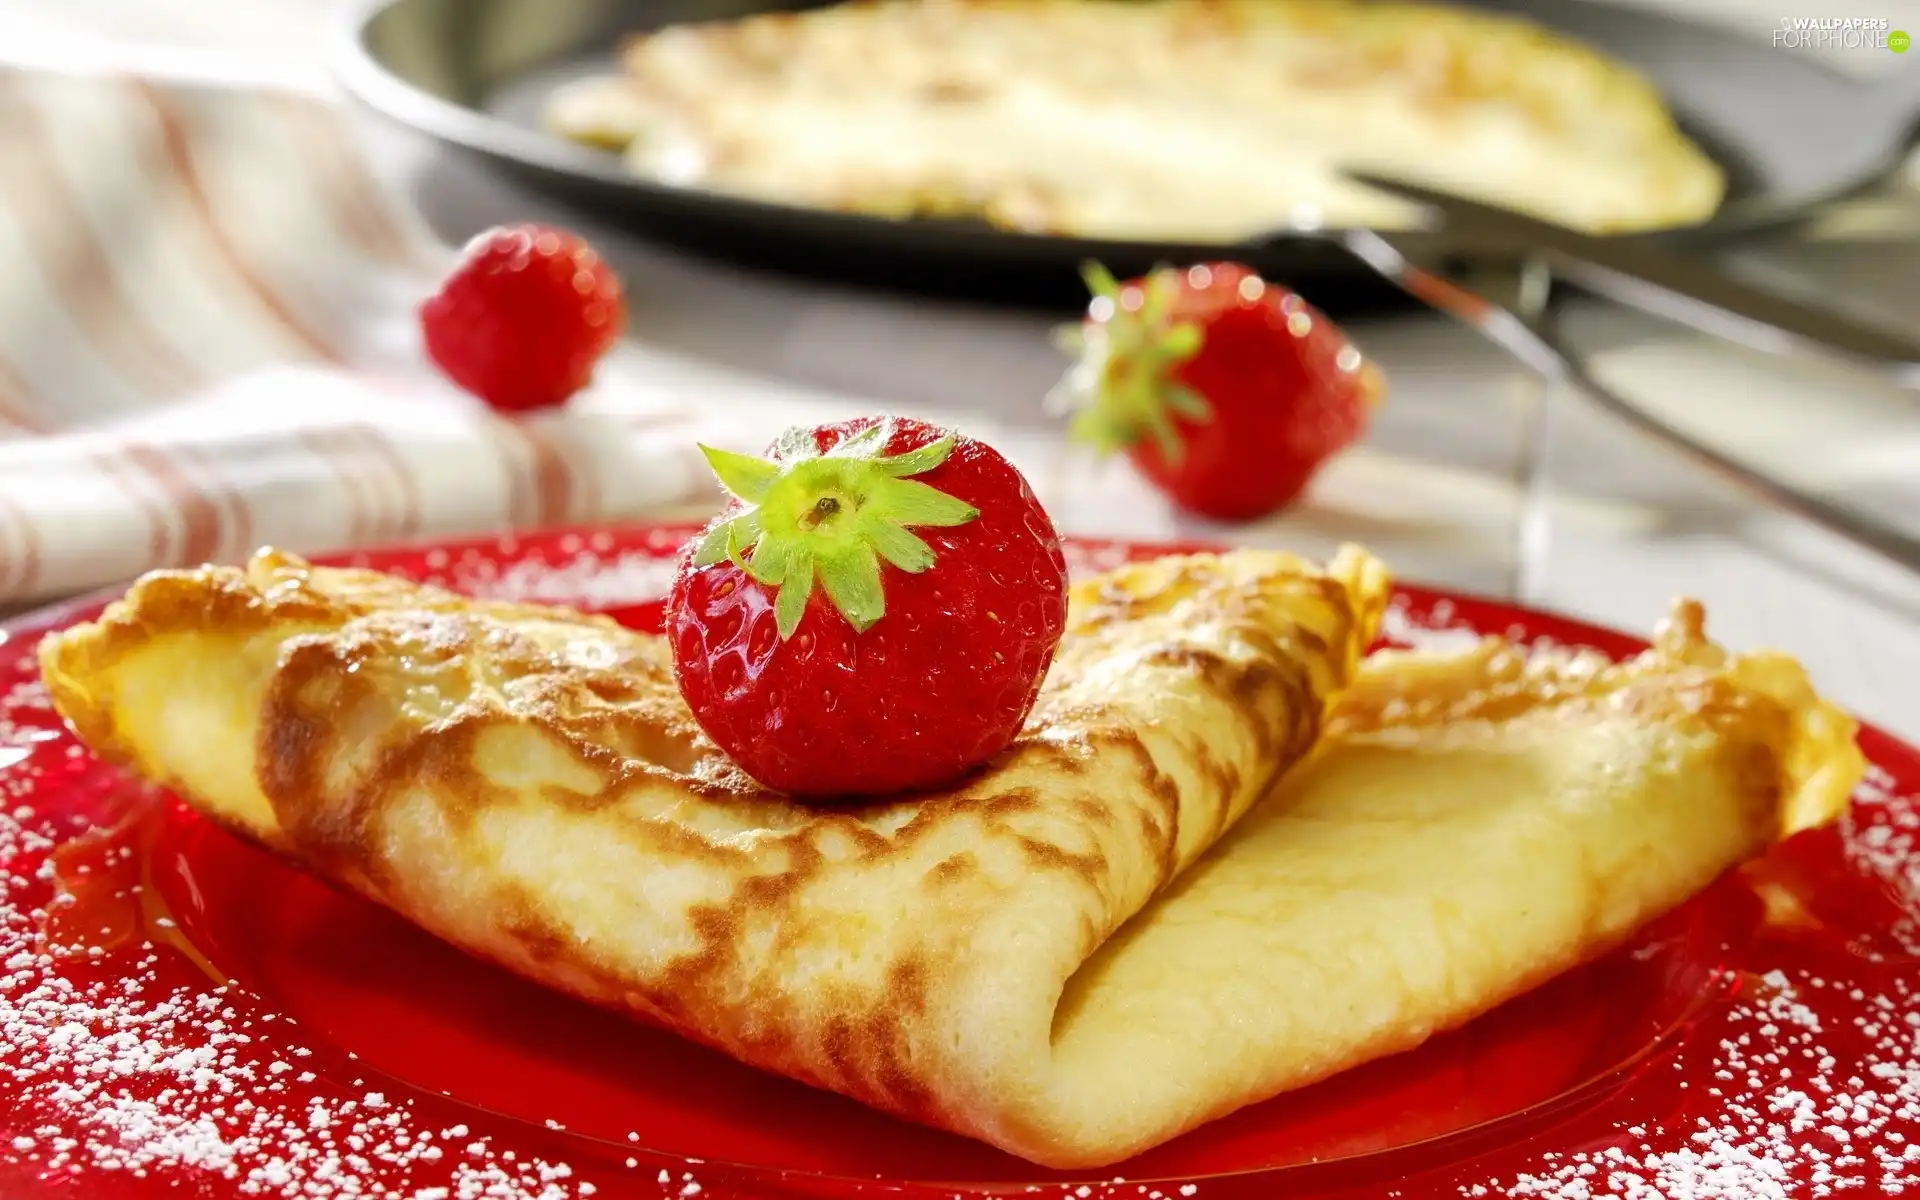 strawberries, plate, pancakes